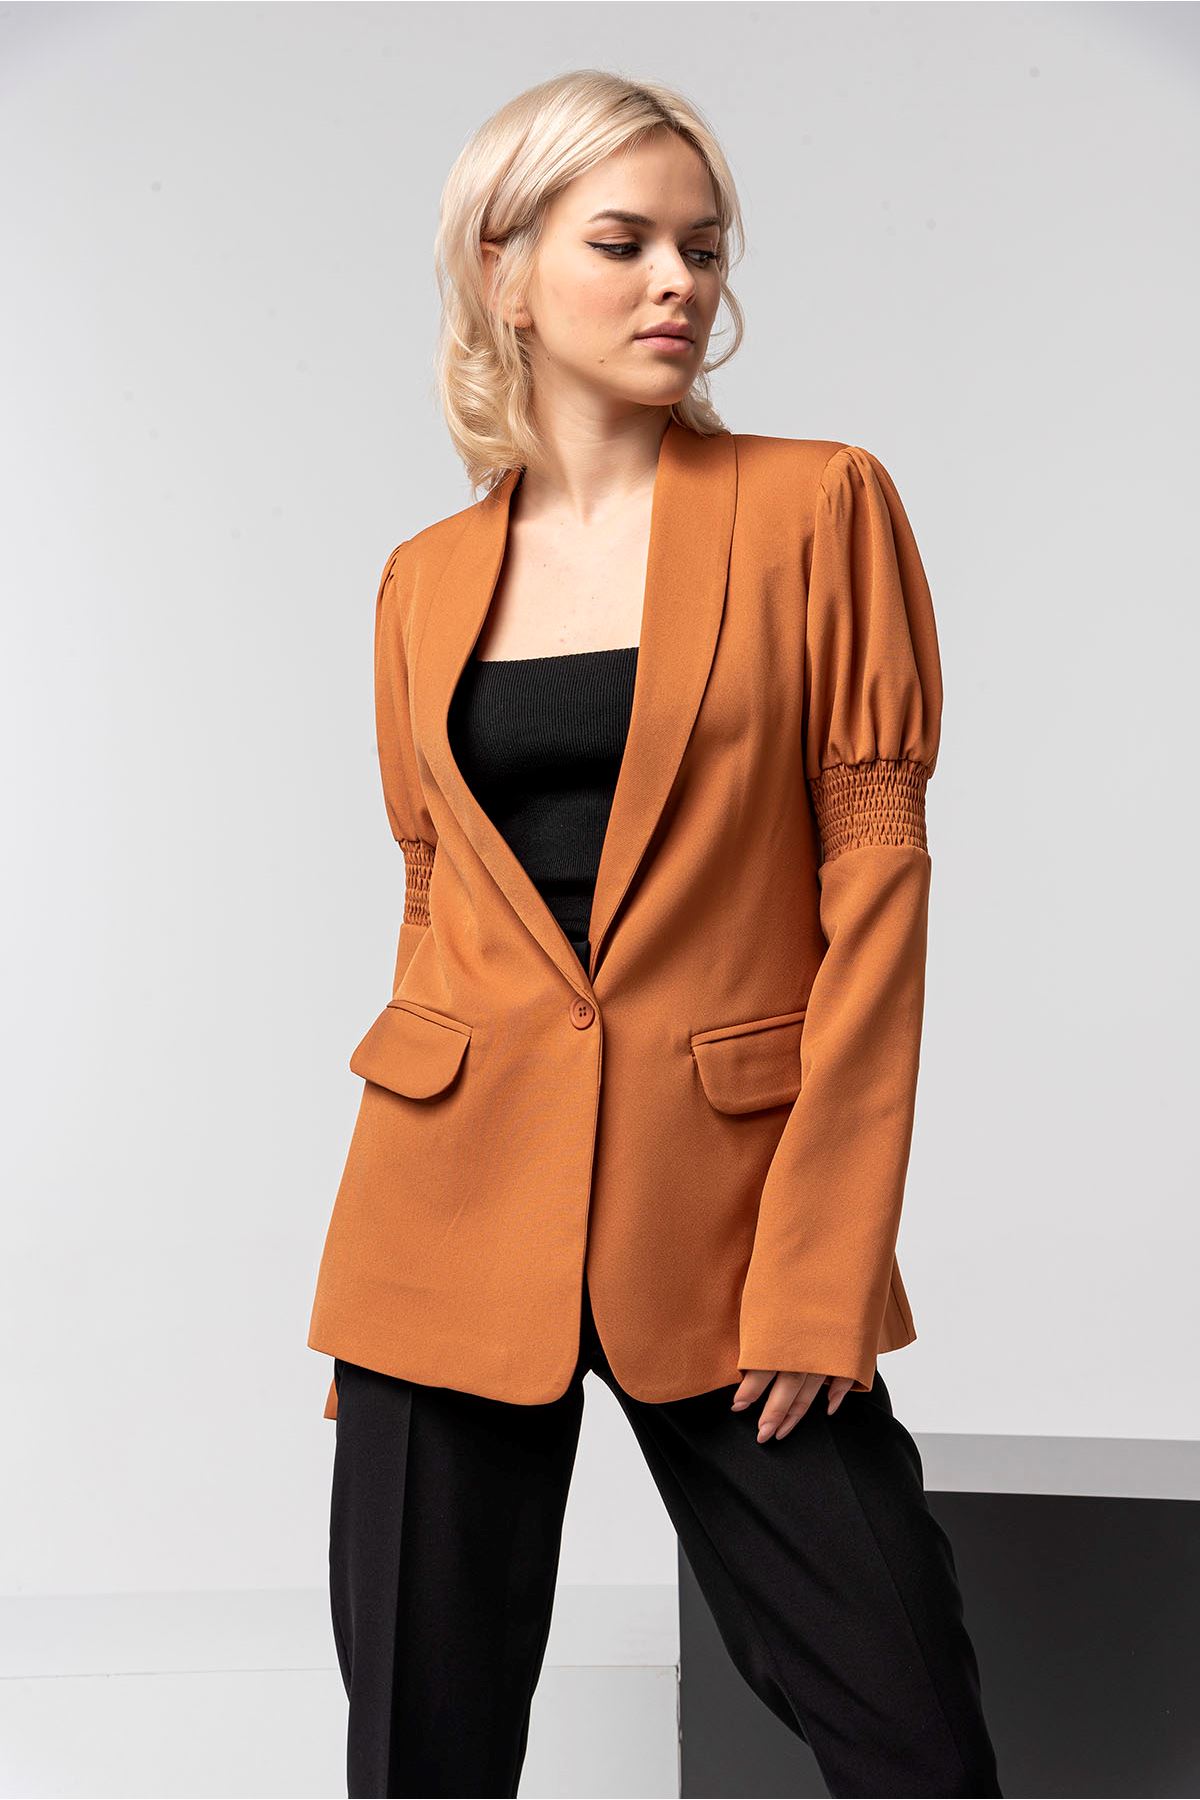 Licra Fabric Long Sleeve Revere Collar Hip Height Classical Women Jacket - Cinnamon 